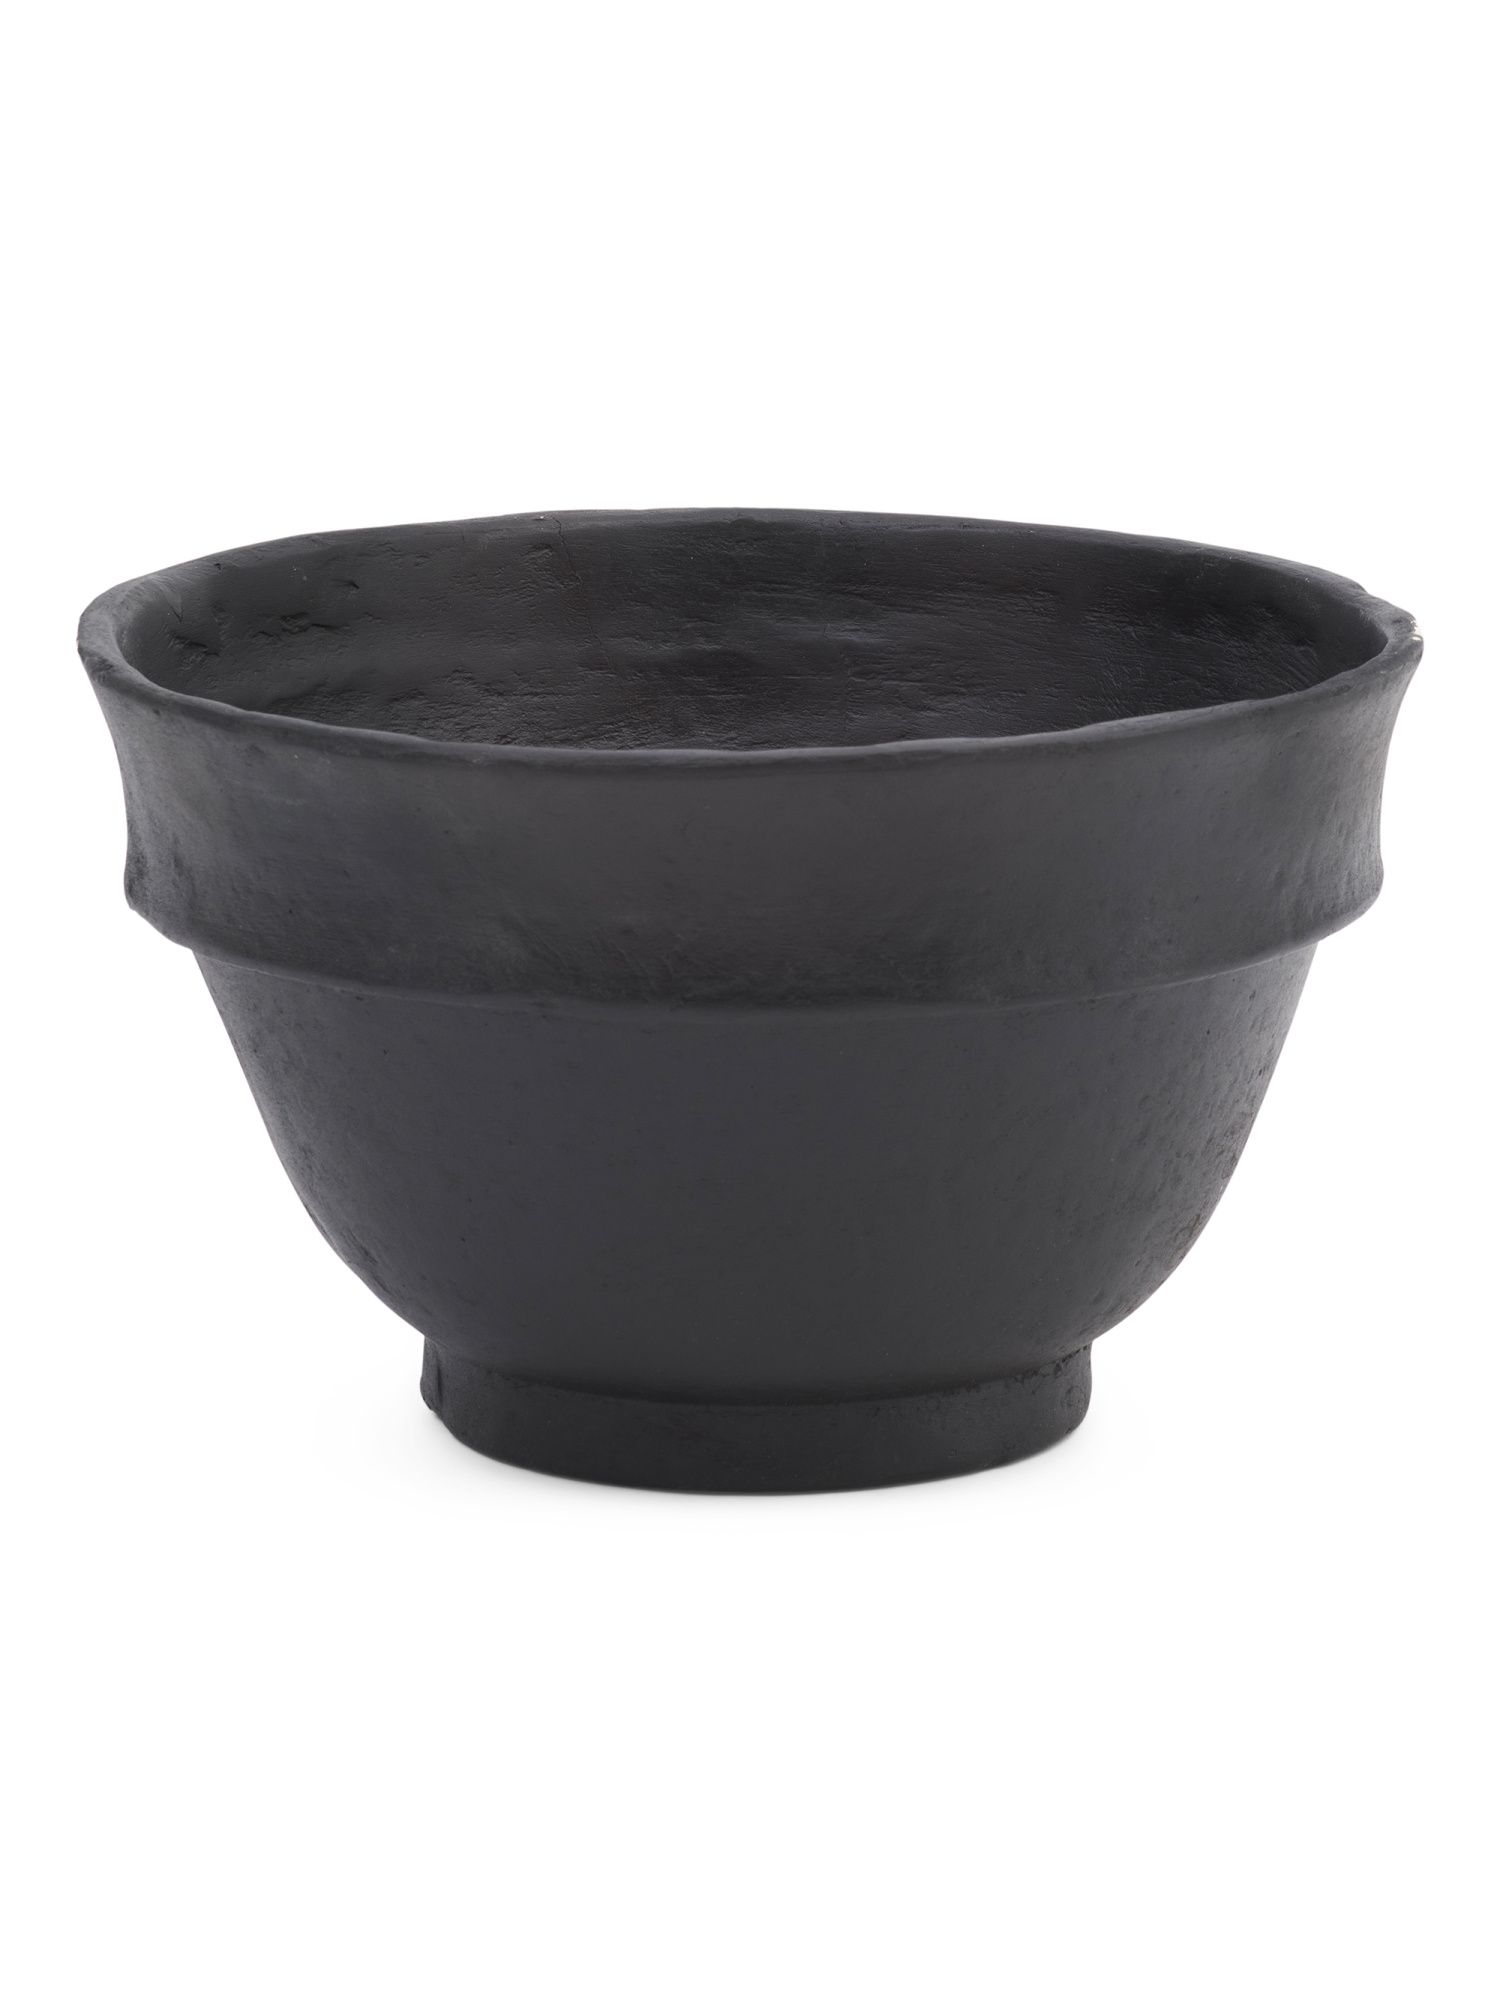 10in Lipped Decorative Bowl | TJ Maxx